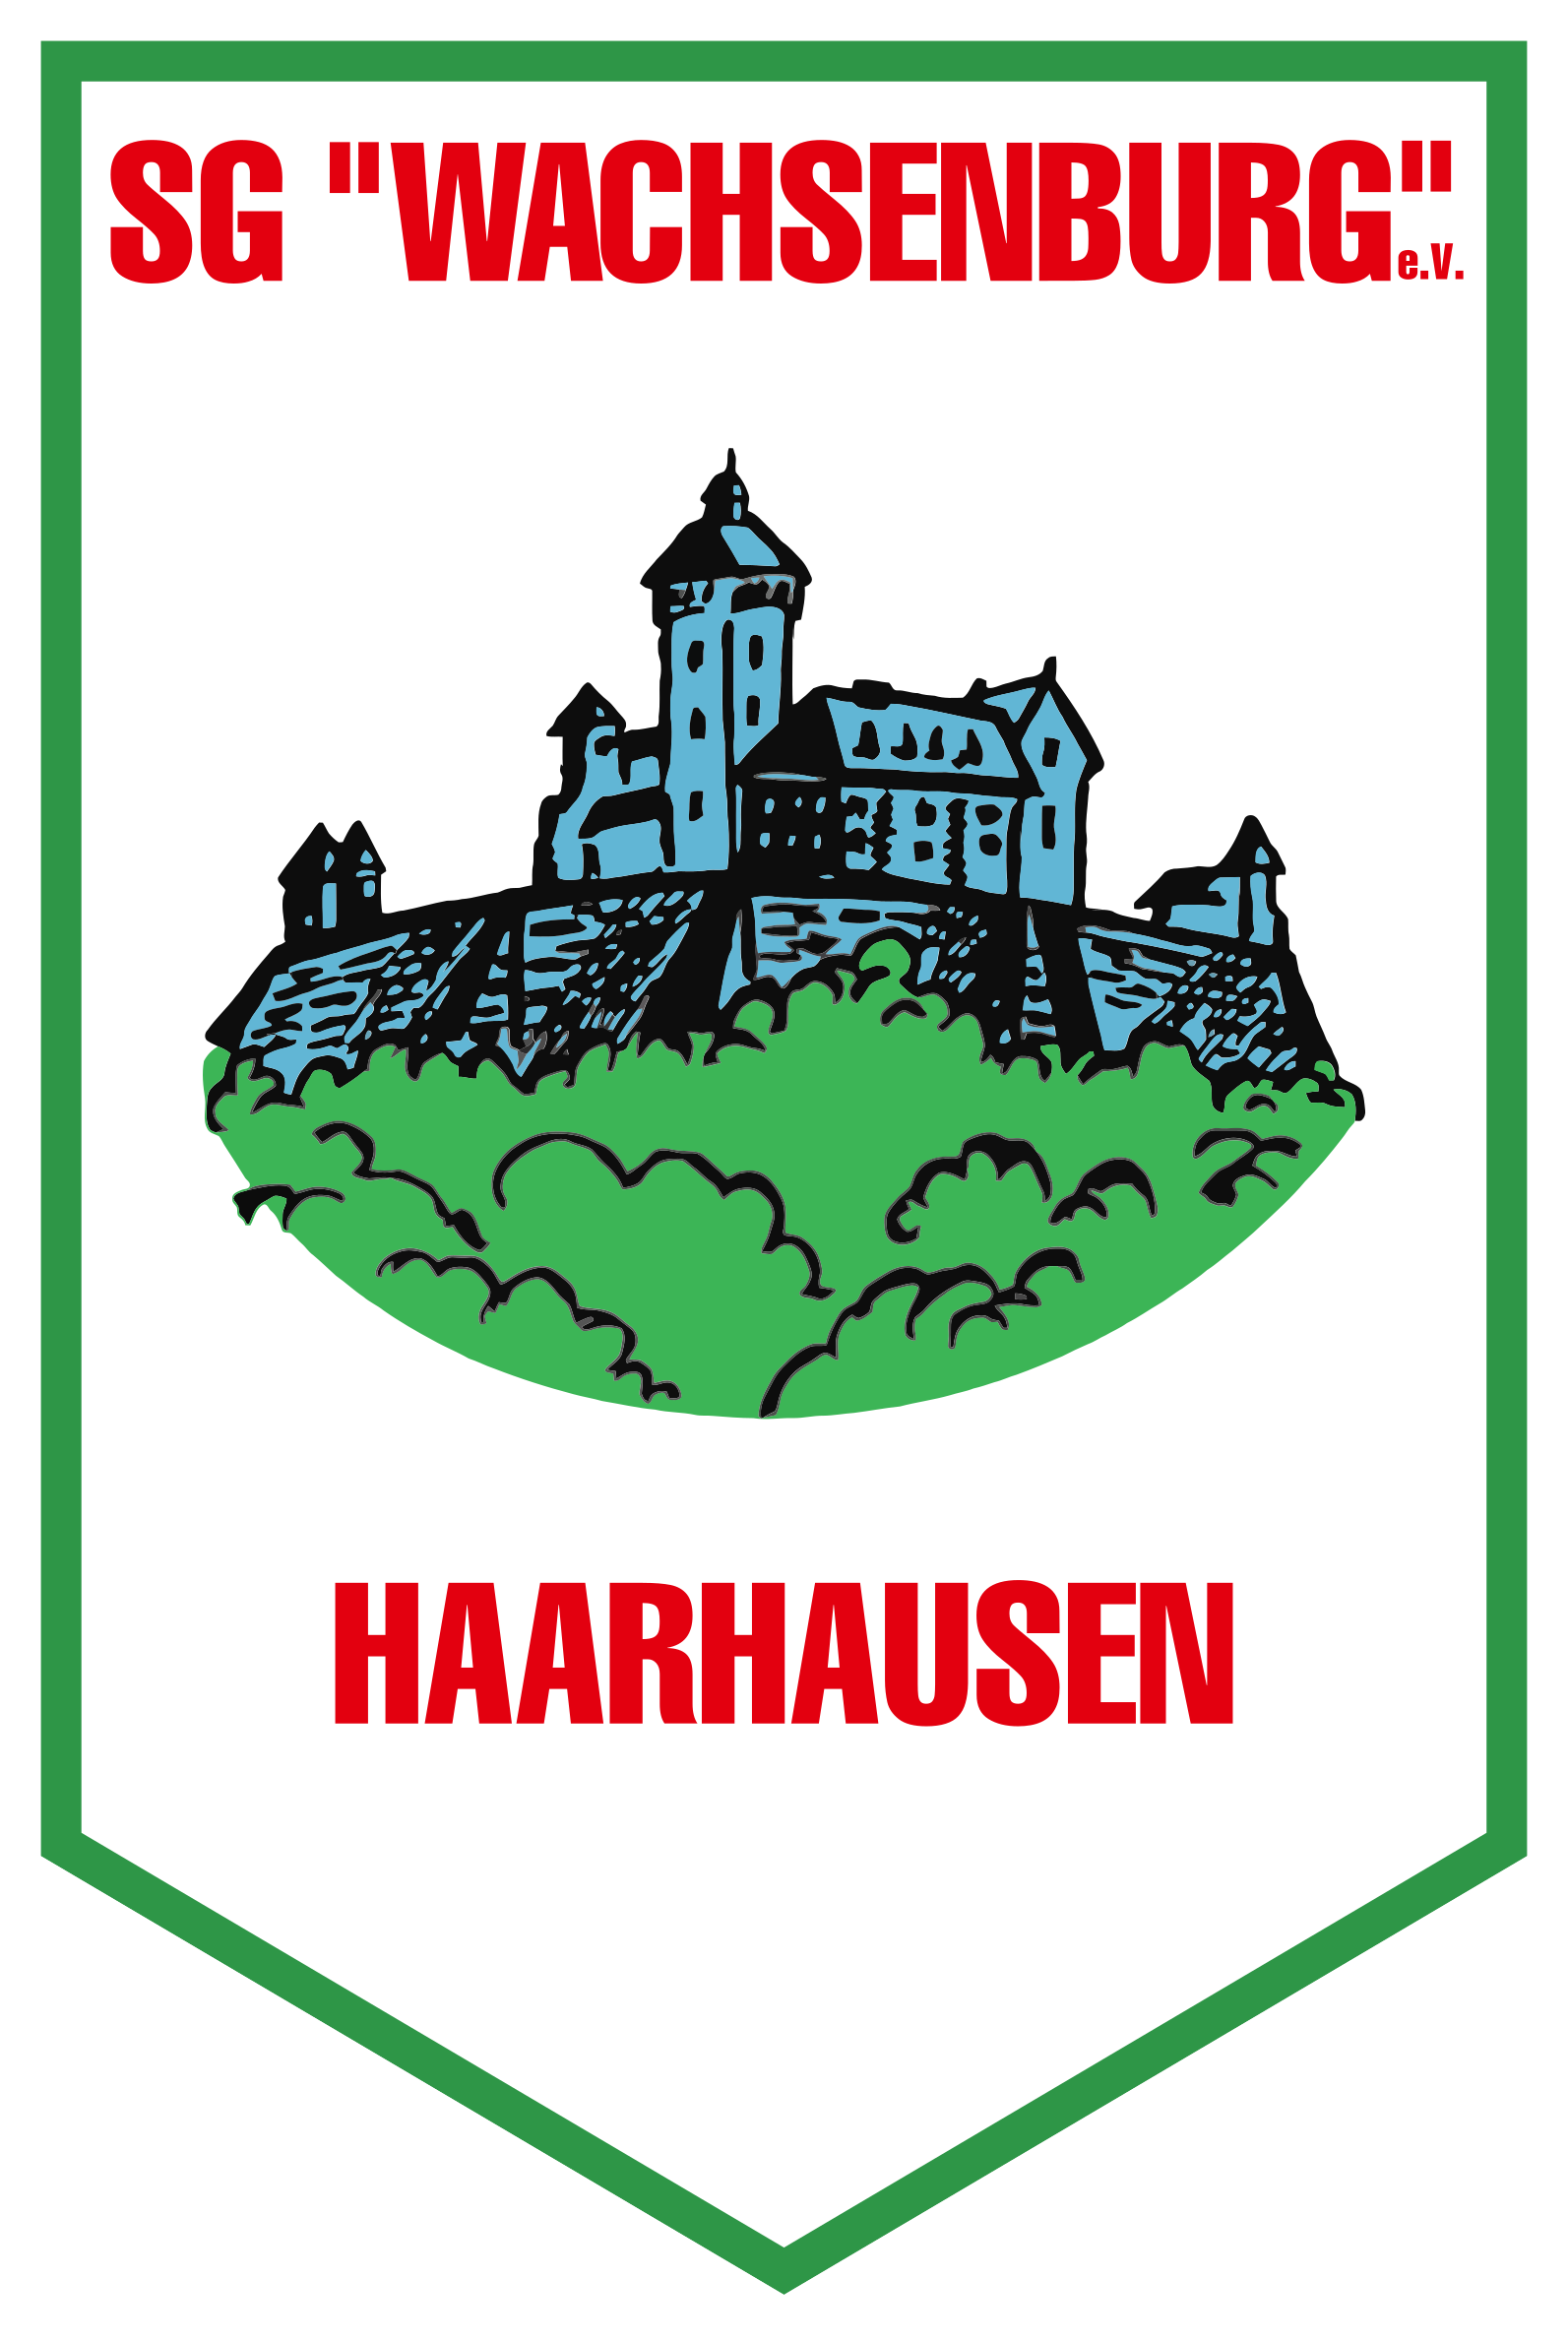 SG Wachsenburg Logo